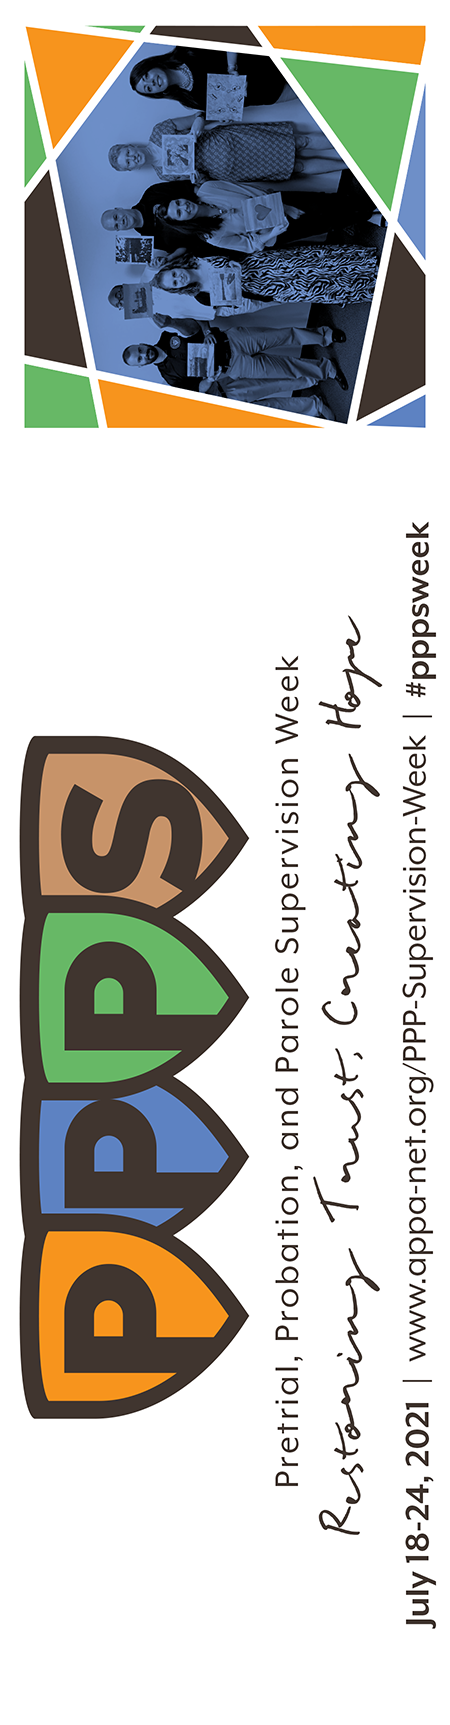 PPPS Week 2021 Bumper Sticker